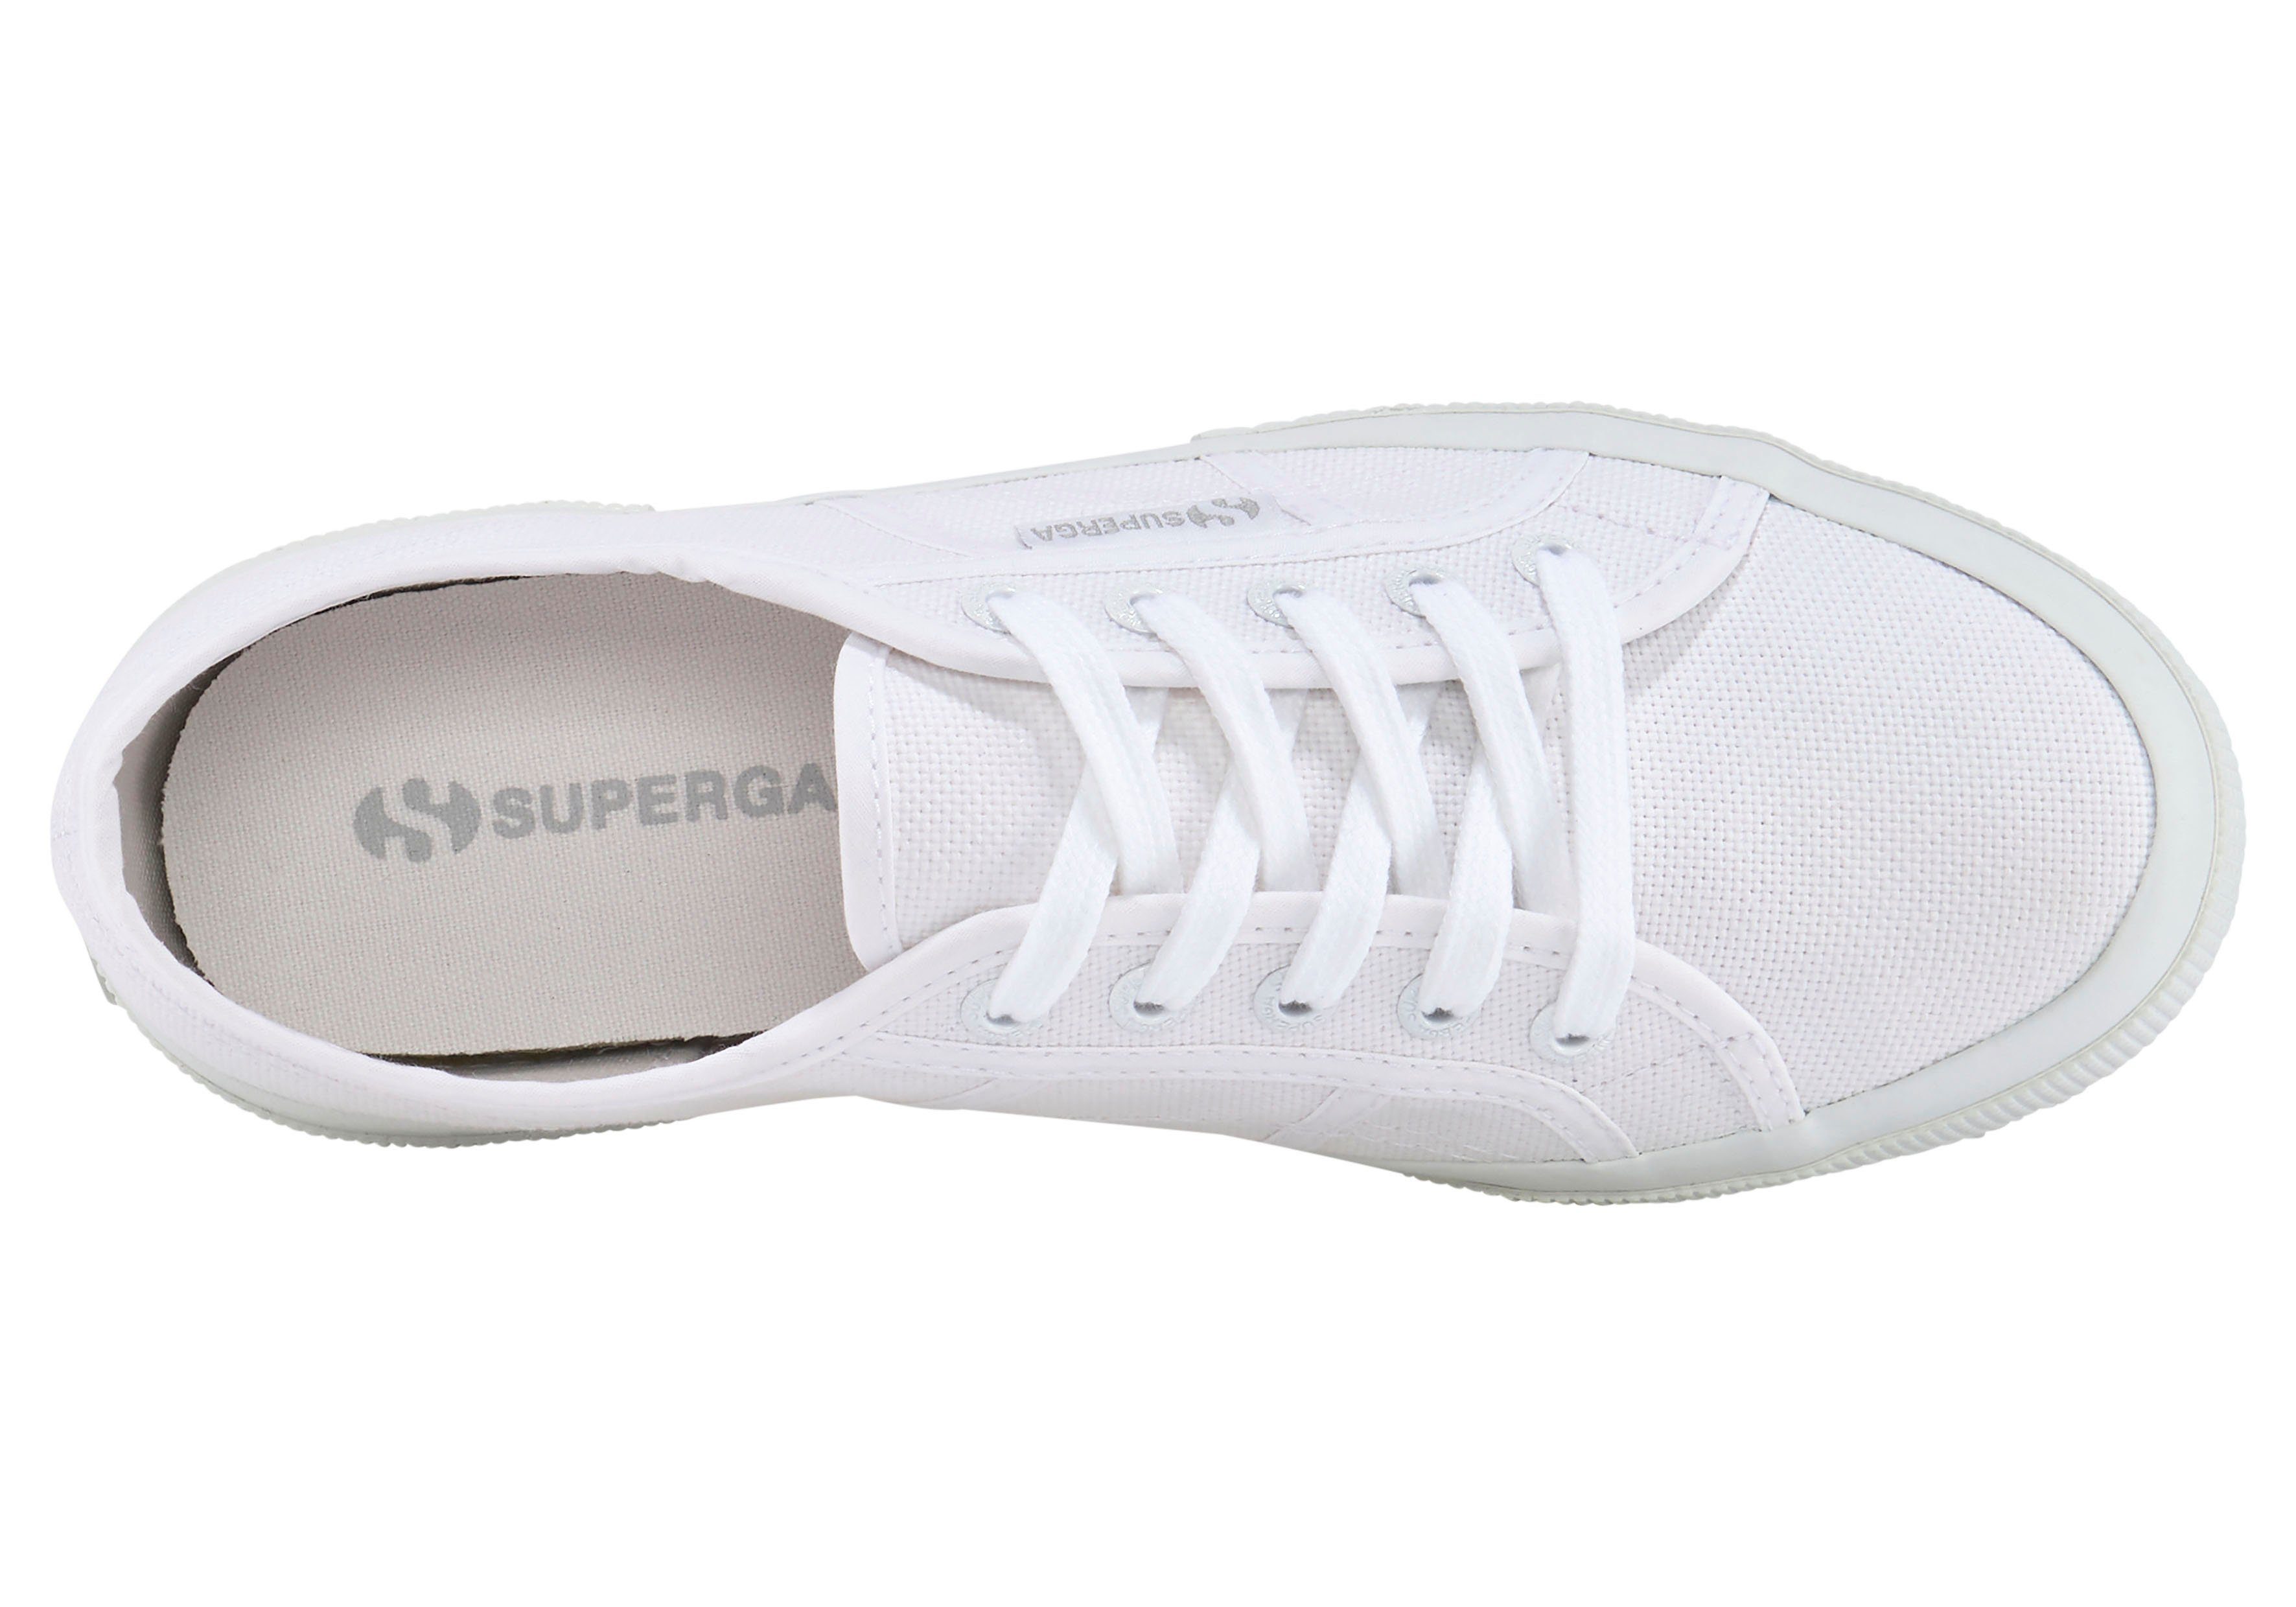 Superga Cotu Classic Sneaker mit klassischem Canvas-Obermaterial reinweiß